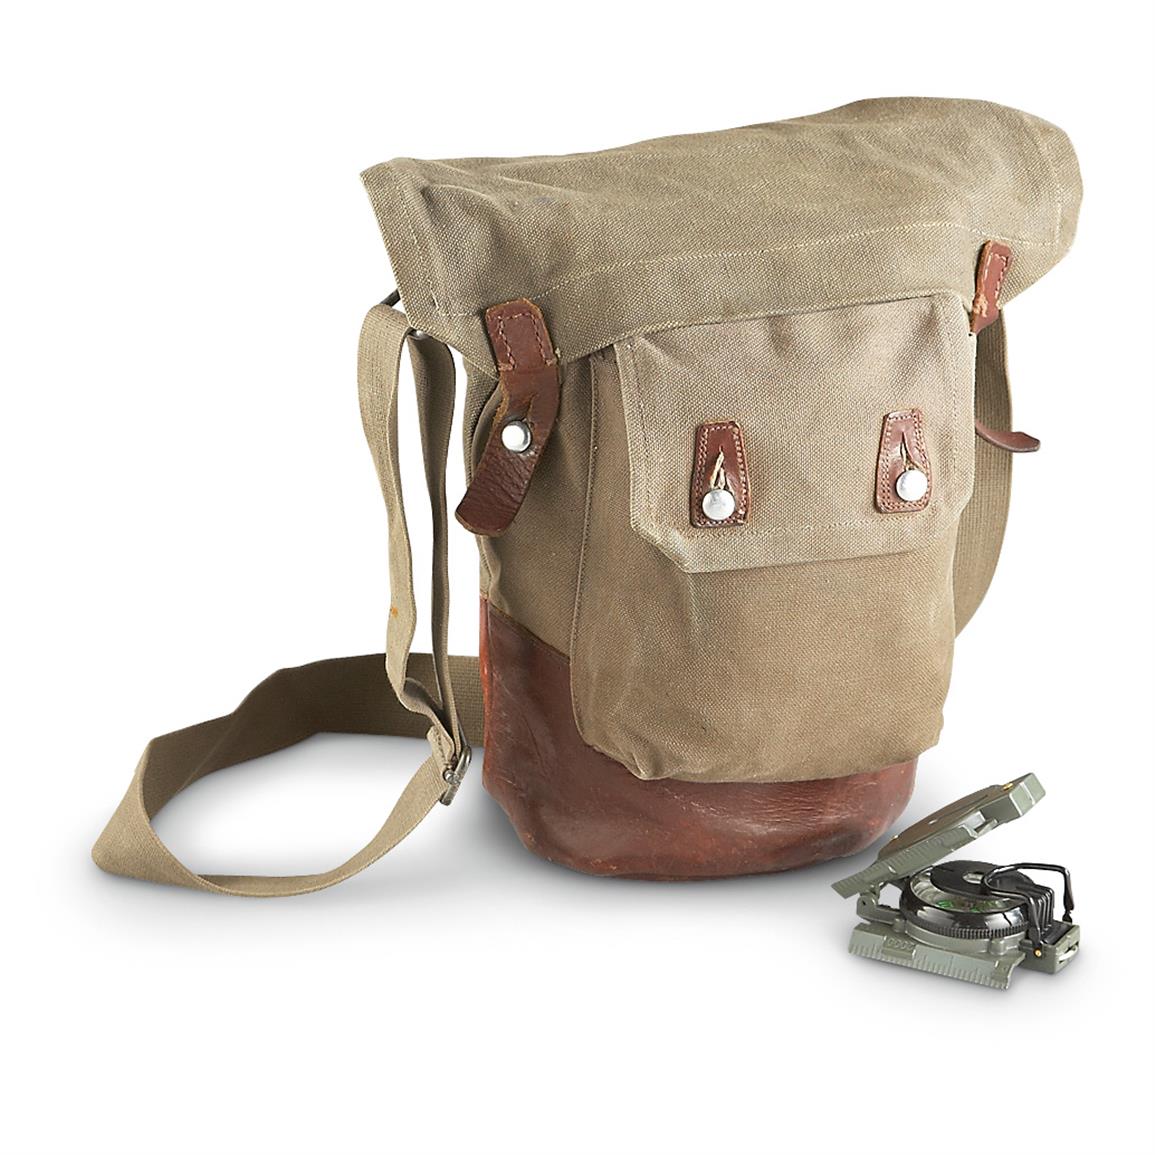 Used Swedish Military Surplus Shoulder Bag - 580029, Military Messenger Bags at Sportsman&#39;s Guide